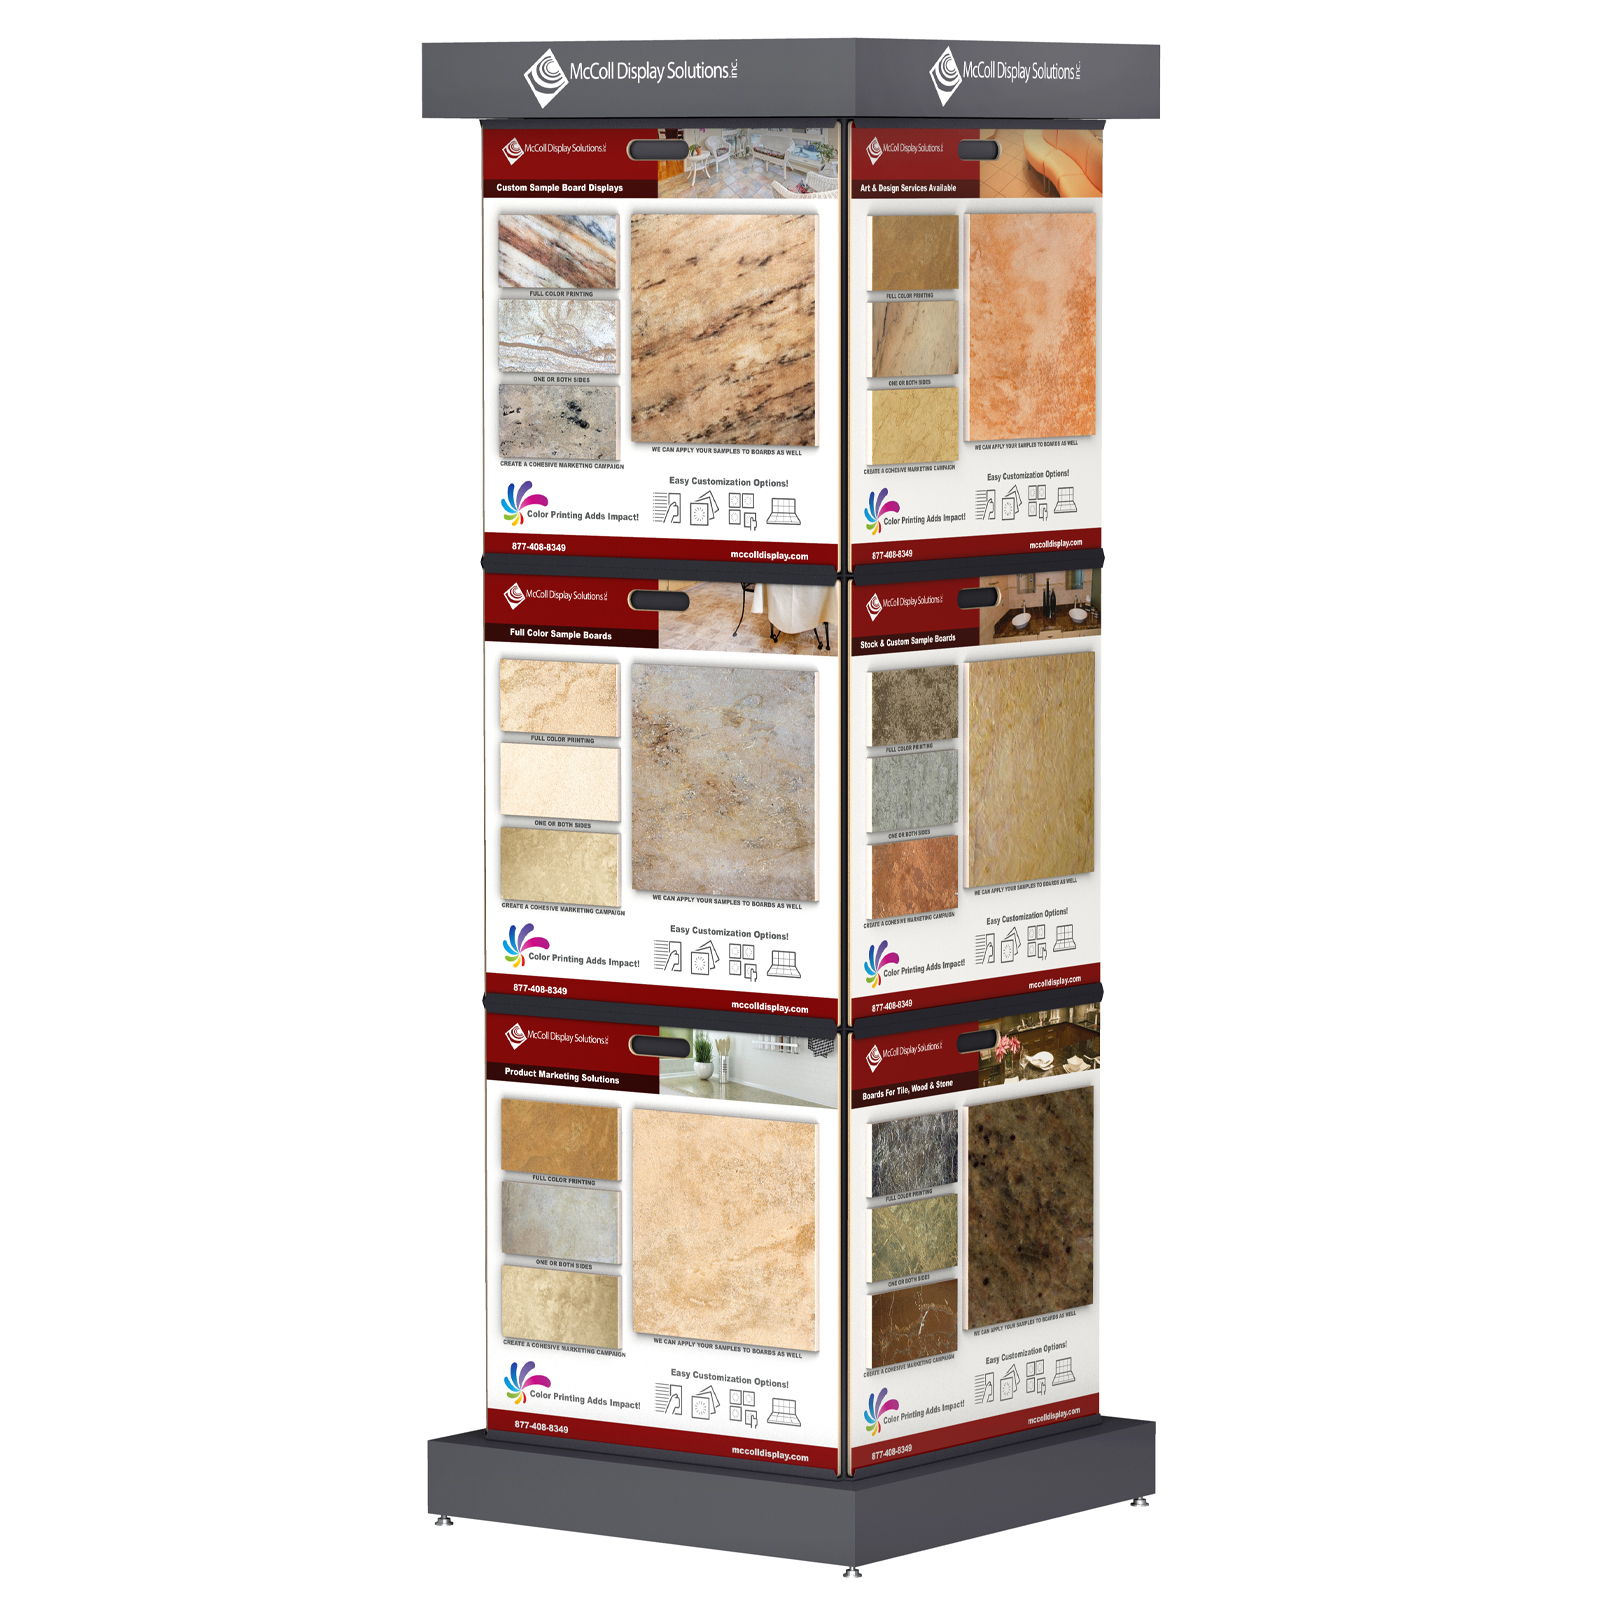 CD66 Tower Sample Board Tile Stone Marble Hardwood System Showroom Displays McColl Display